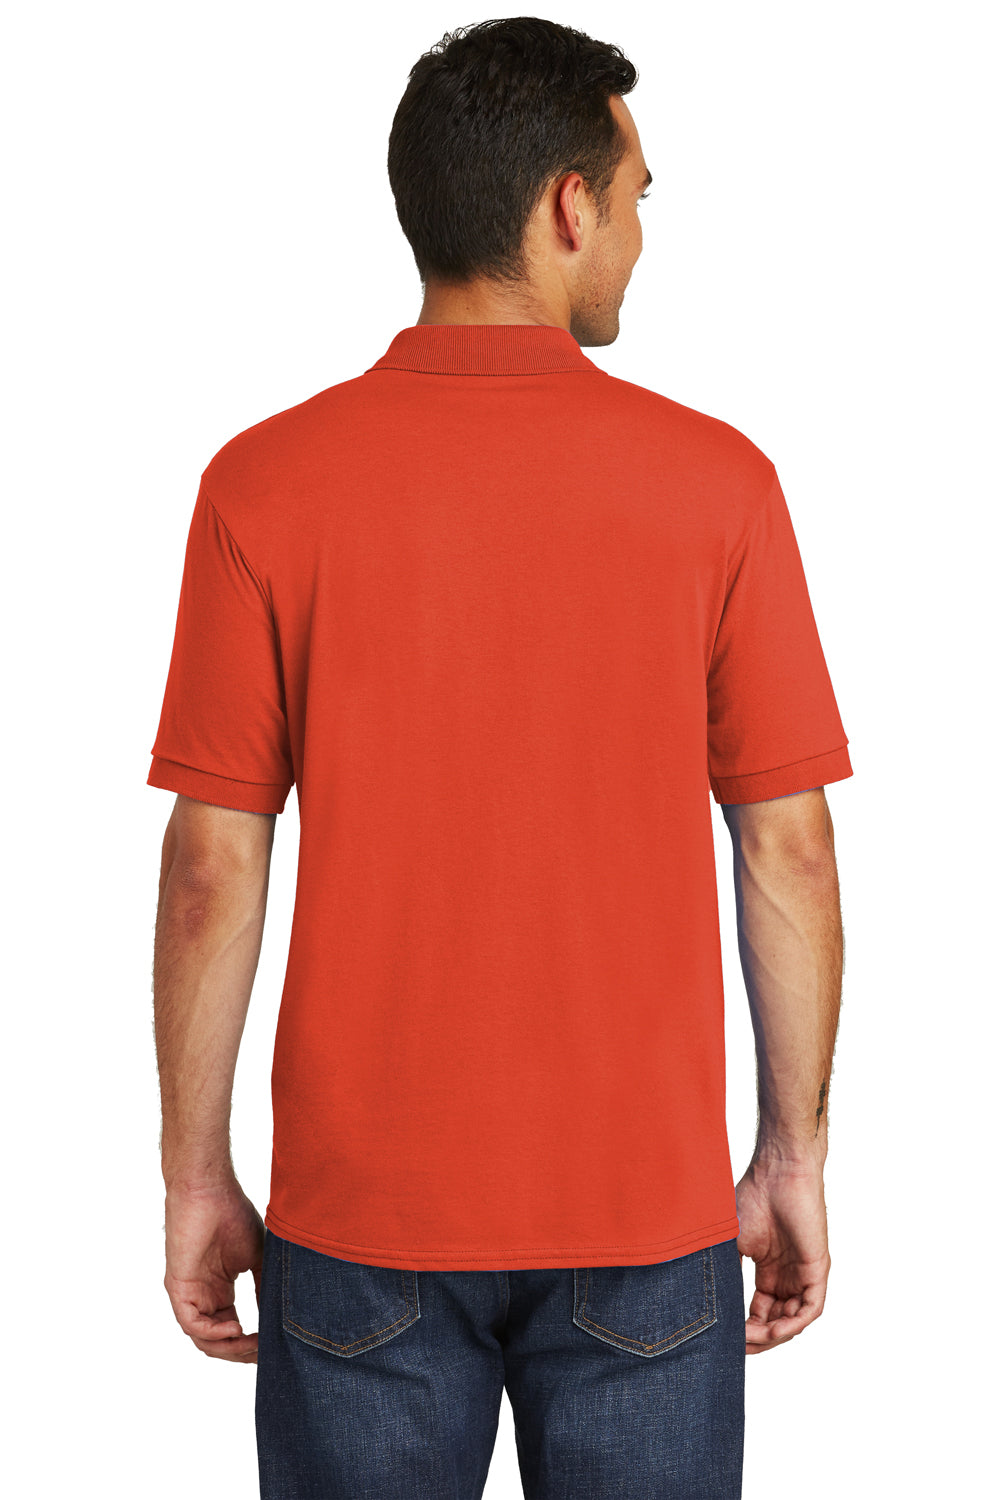 Port & Company KP55 Mens Core Stain Resistant Short Sleeve Polo Shirt Orange Back